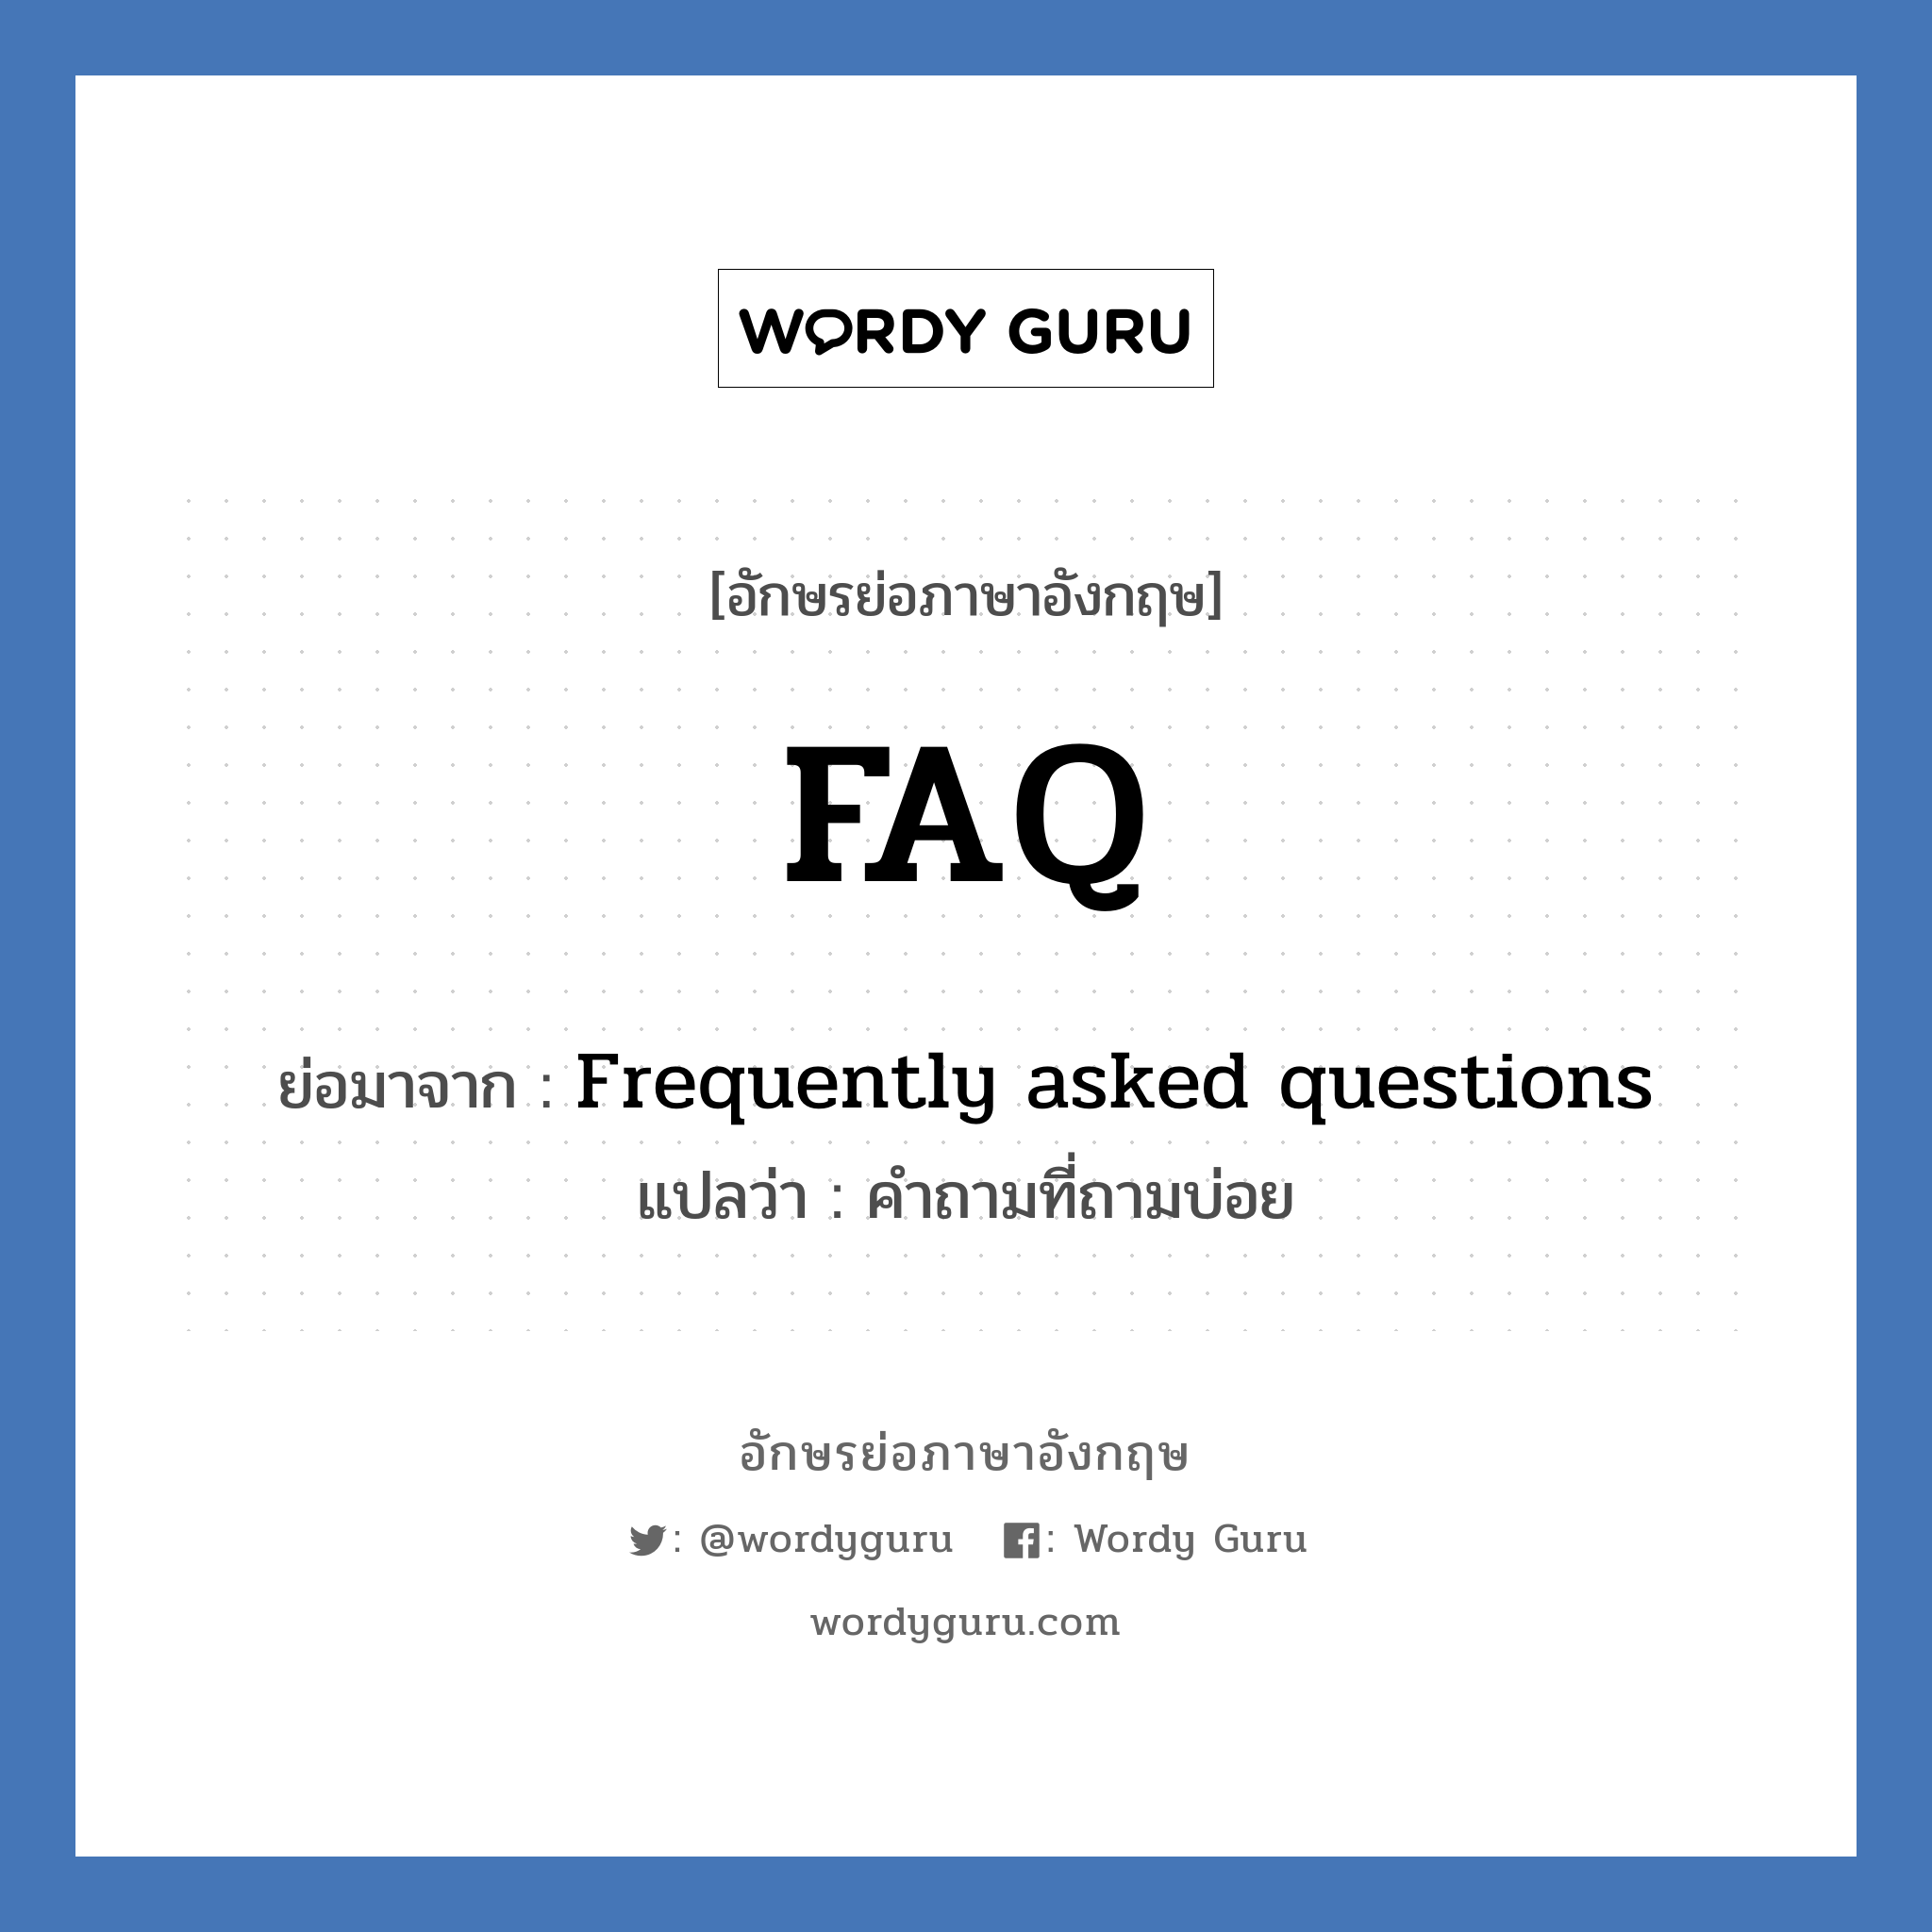 Frequently asked questions คำย่อคือ? แปลว่า?, อักษรย่อภาษาอังกฤษ Frequently asked questions ย่อมาจาก FAQ แปลว่า คำถามที่ถามบ่อย